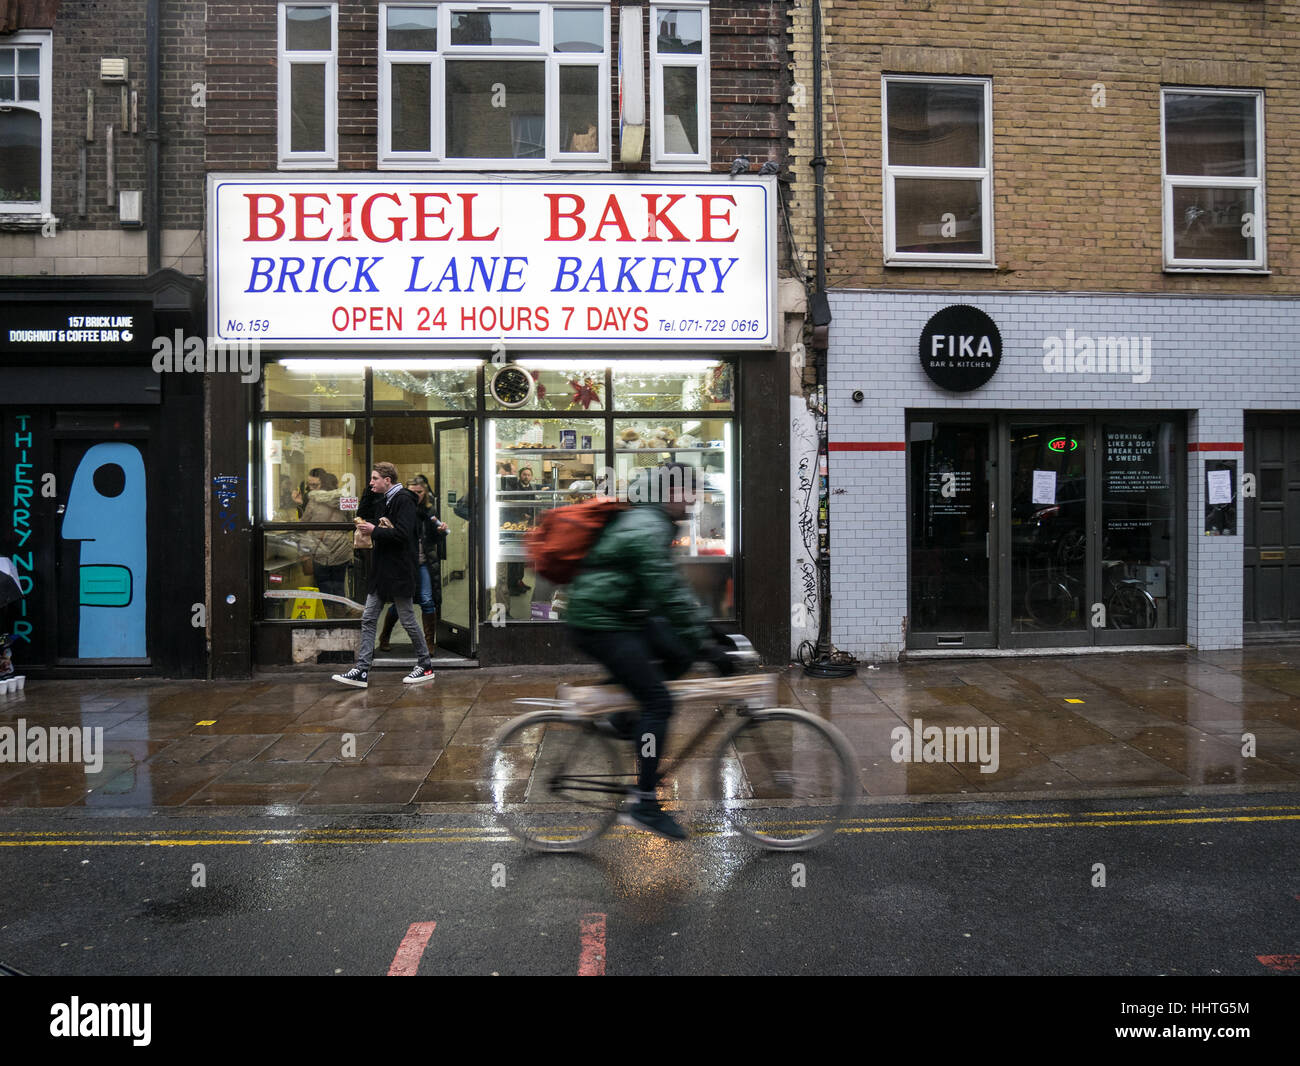 Beigel Shop Brick Lane - Bagel Shop A cyclist rides past the 24 Hour Beigel Bakery in London's Brick Lane Stock Photo